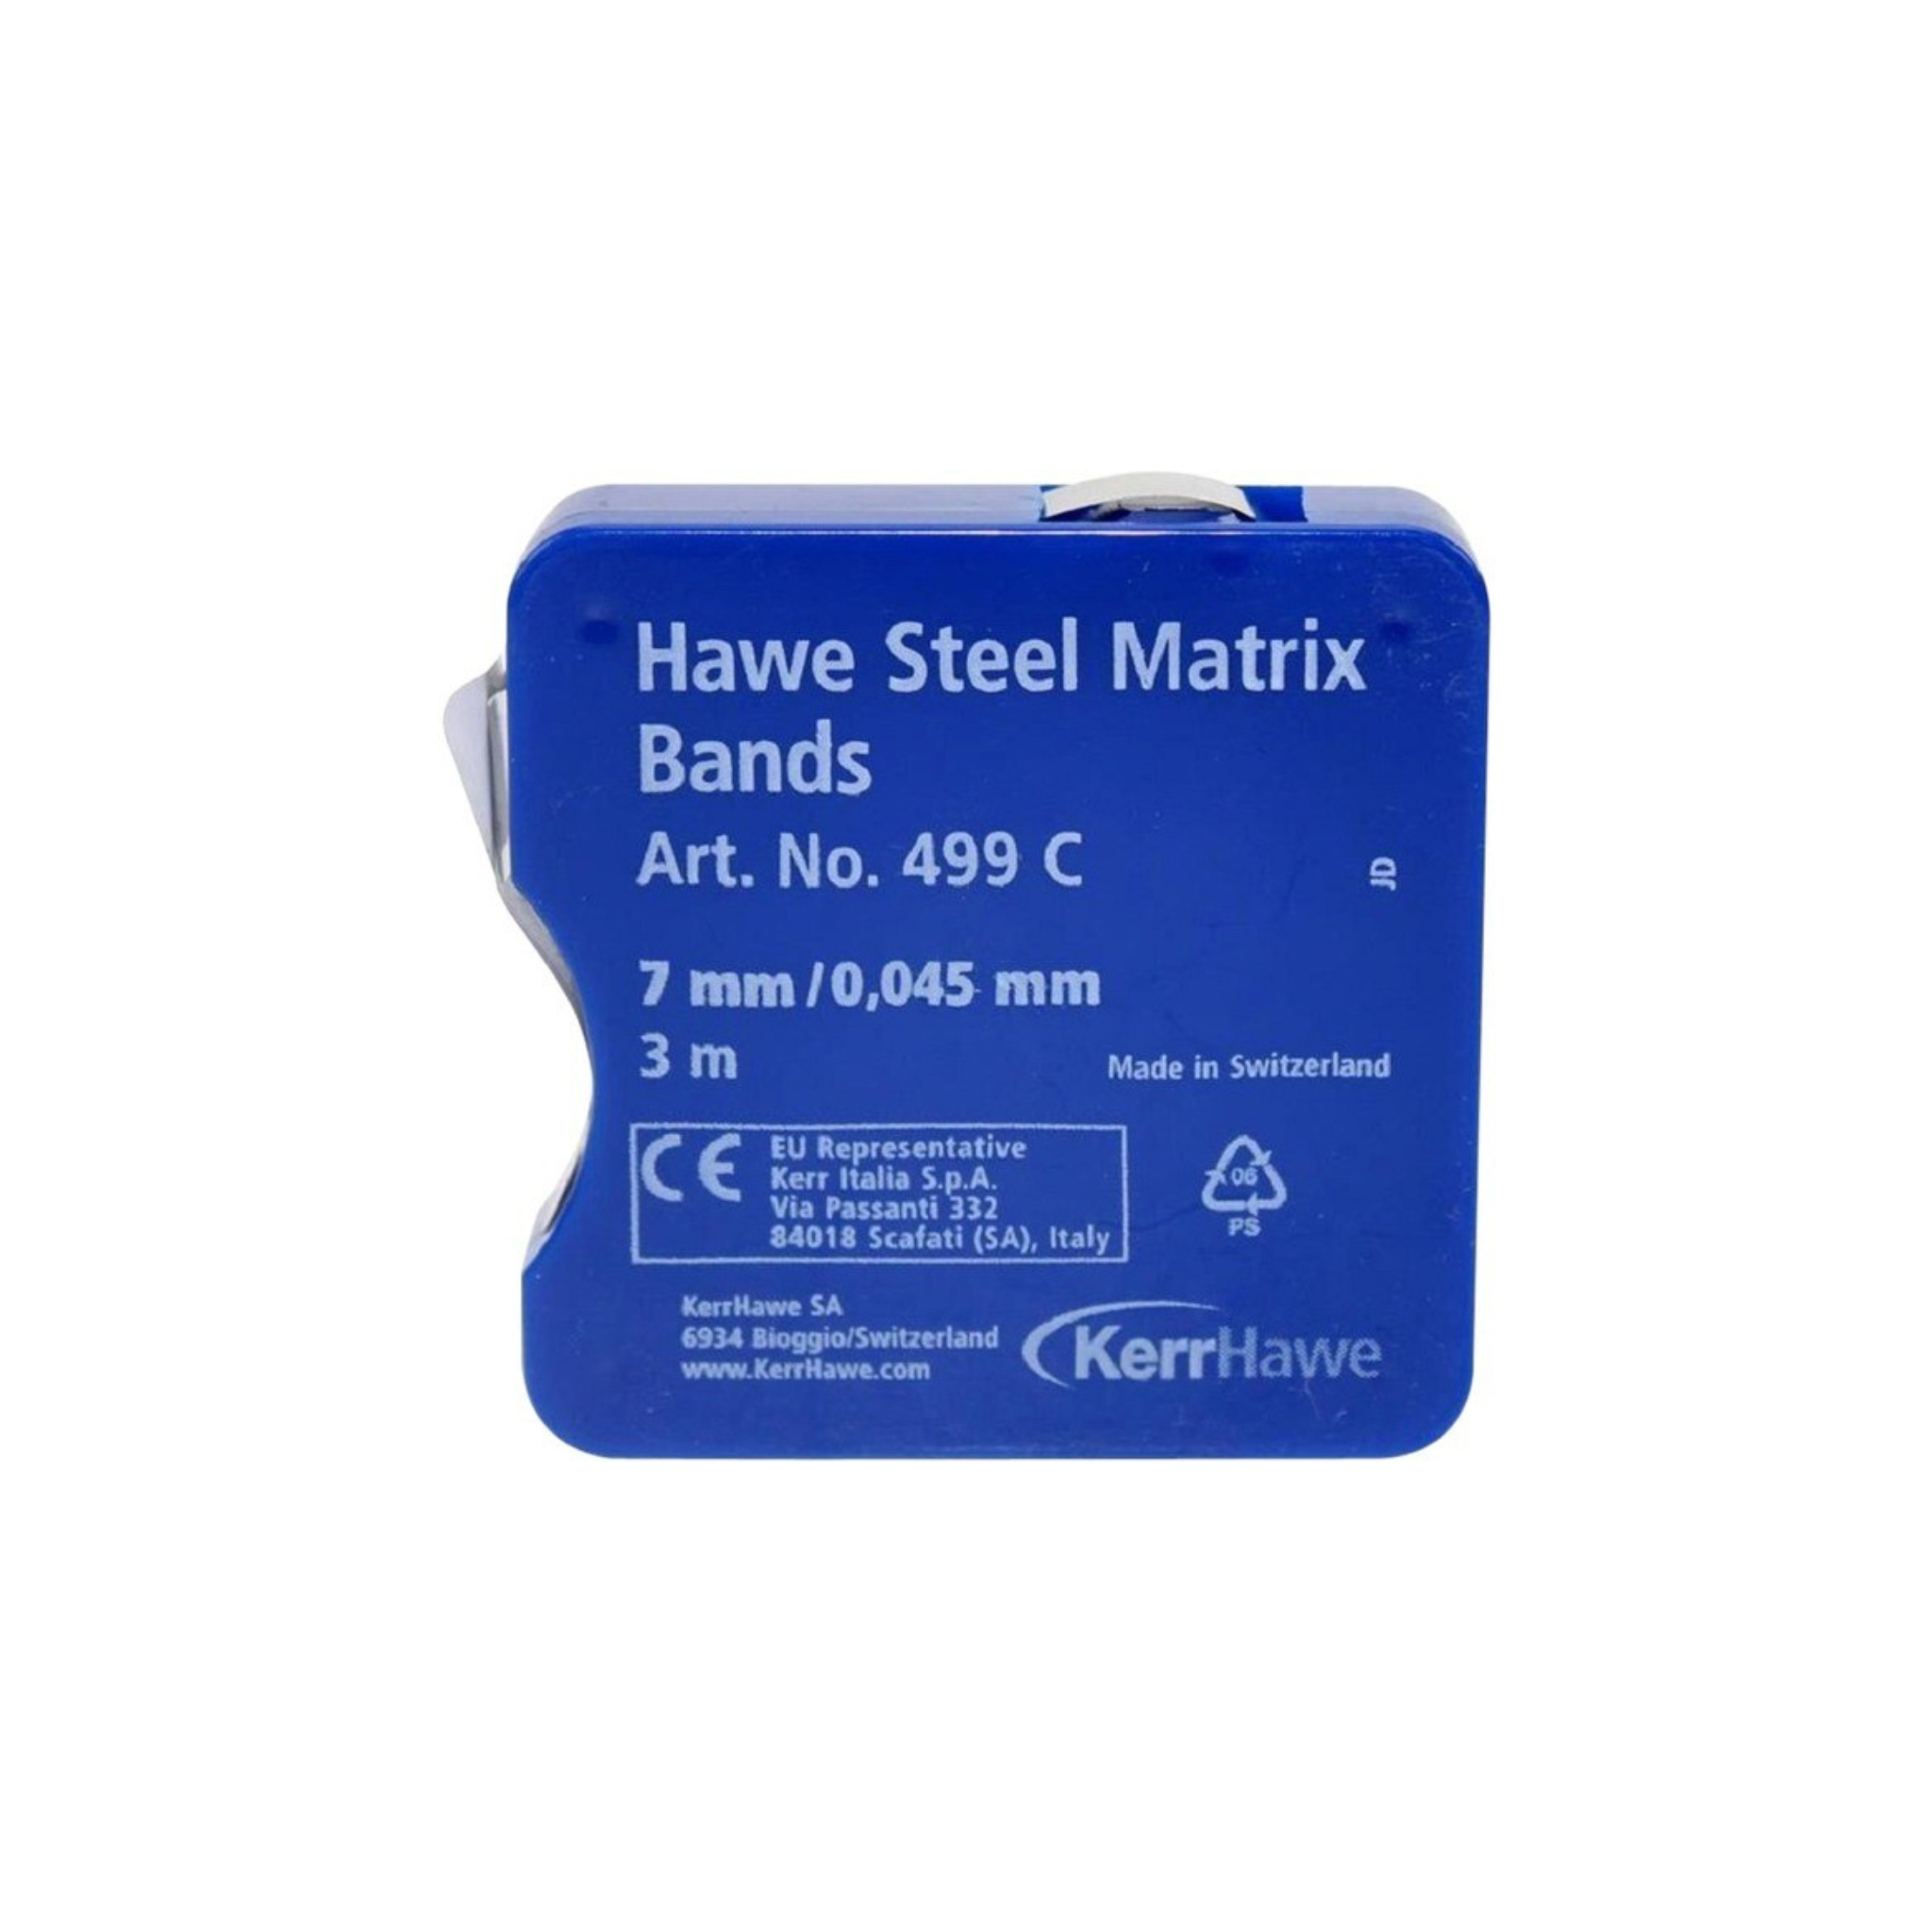 Steel matrix bands<br> Hawe